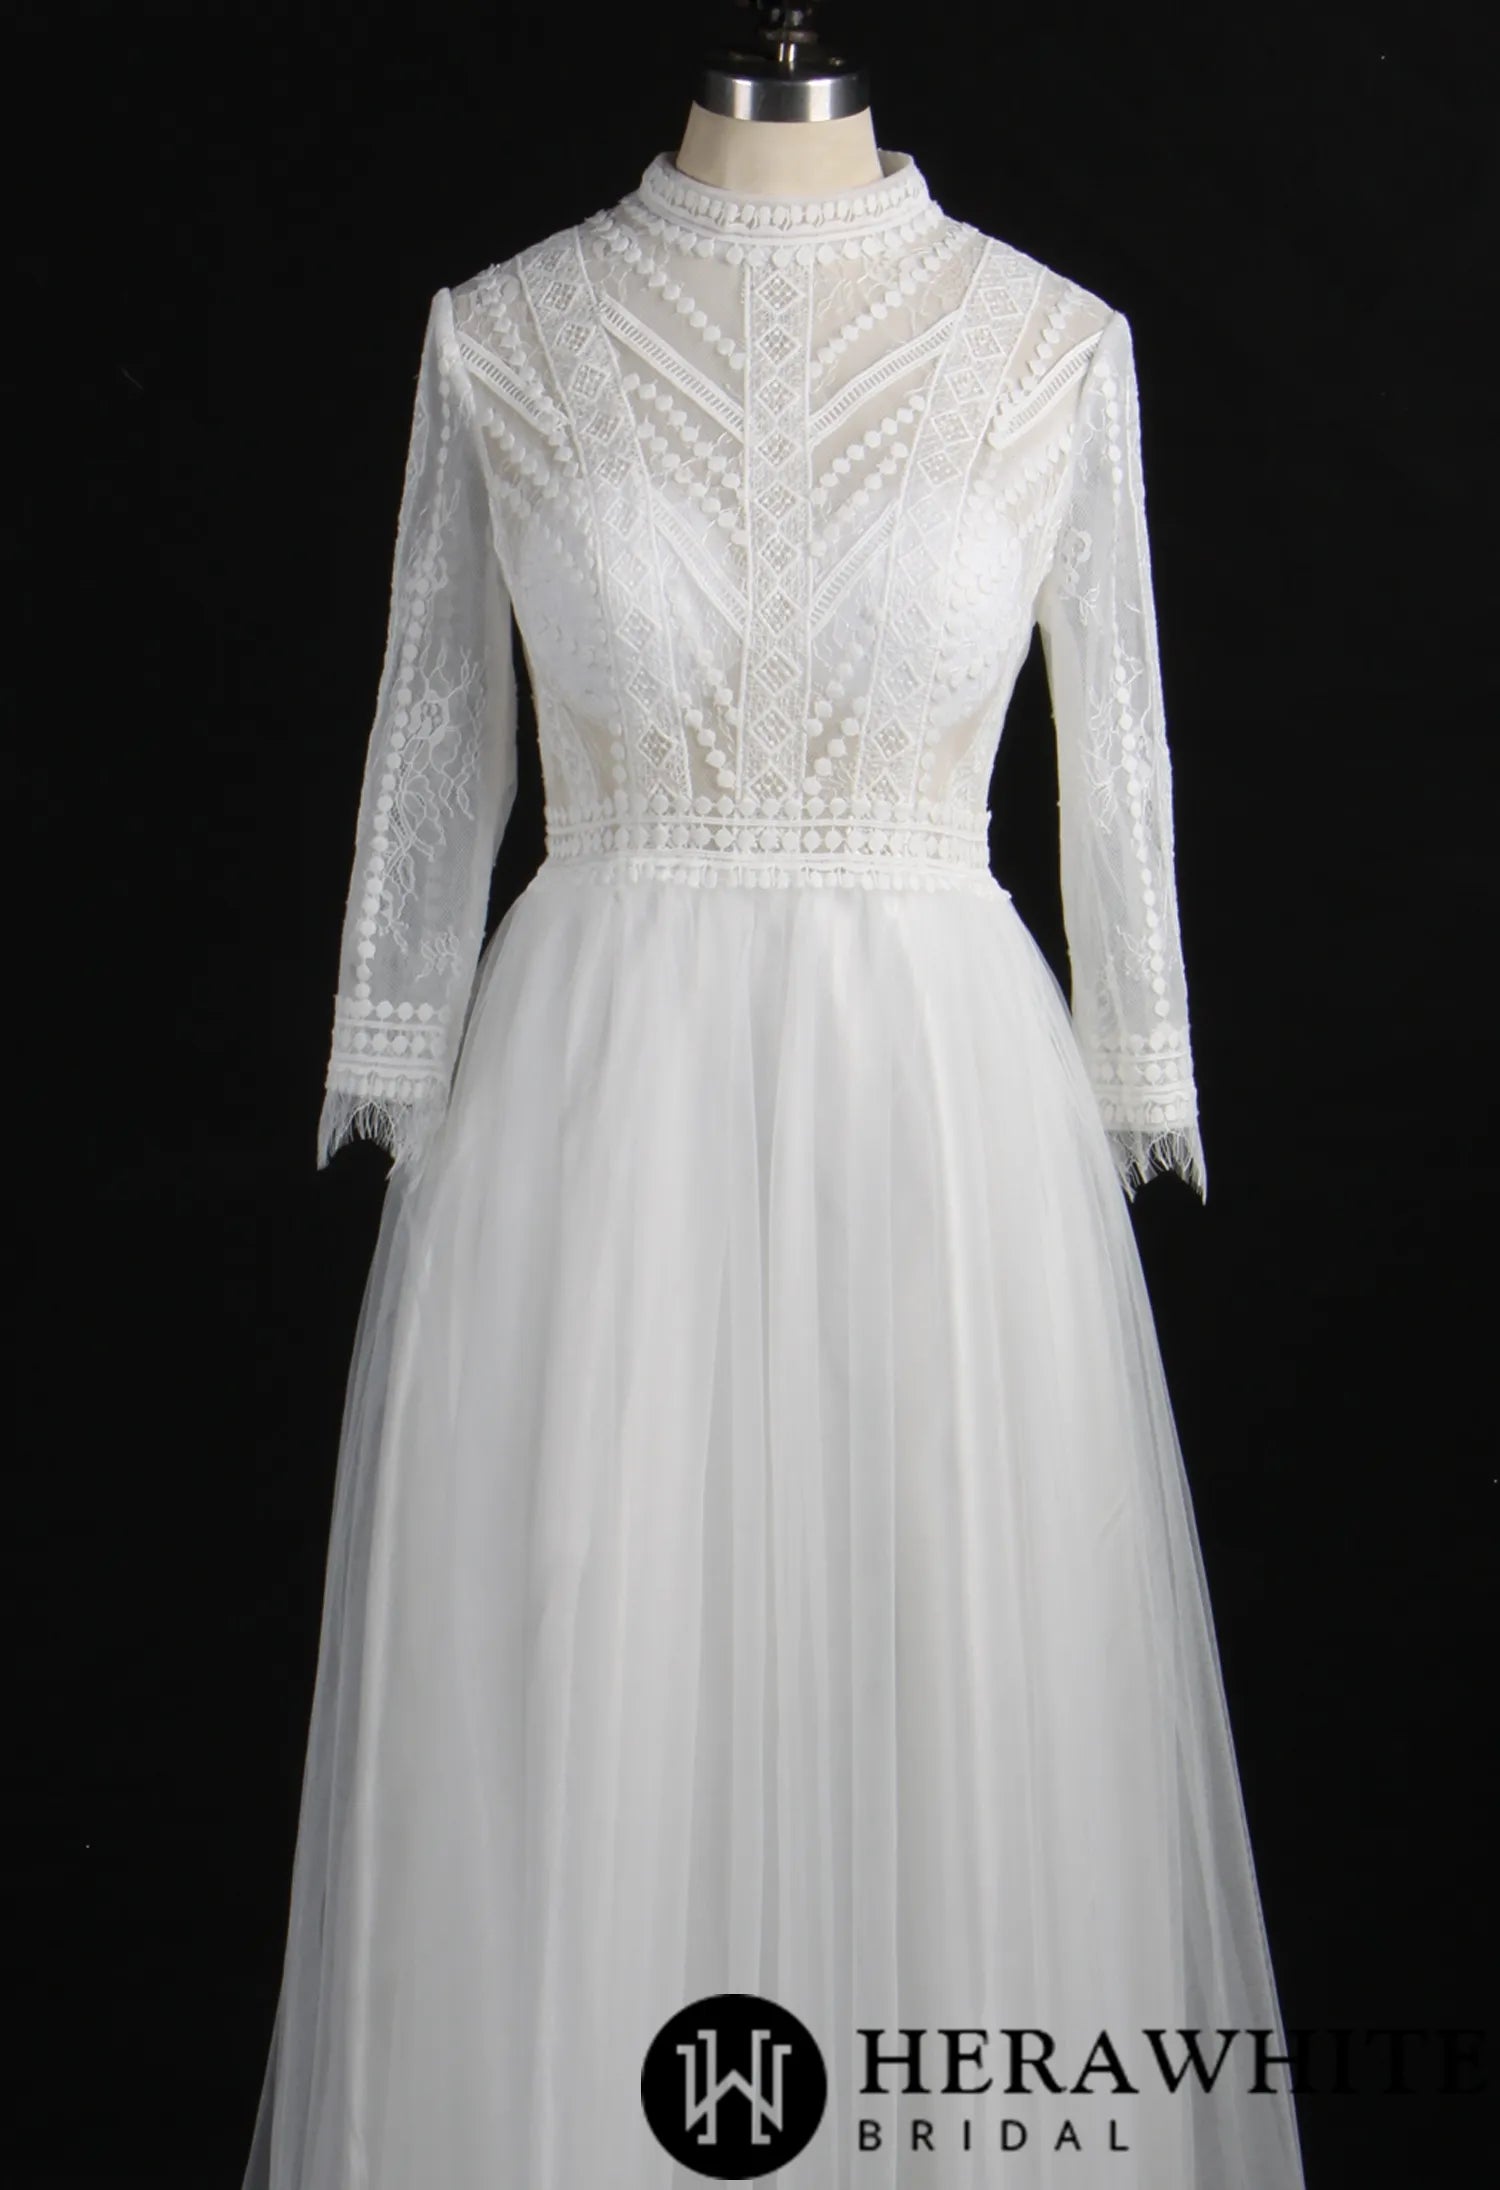 Flowy Long Sleeve High Neck A-Line Wedding Dress